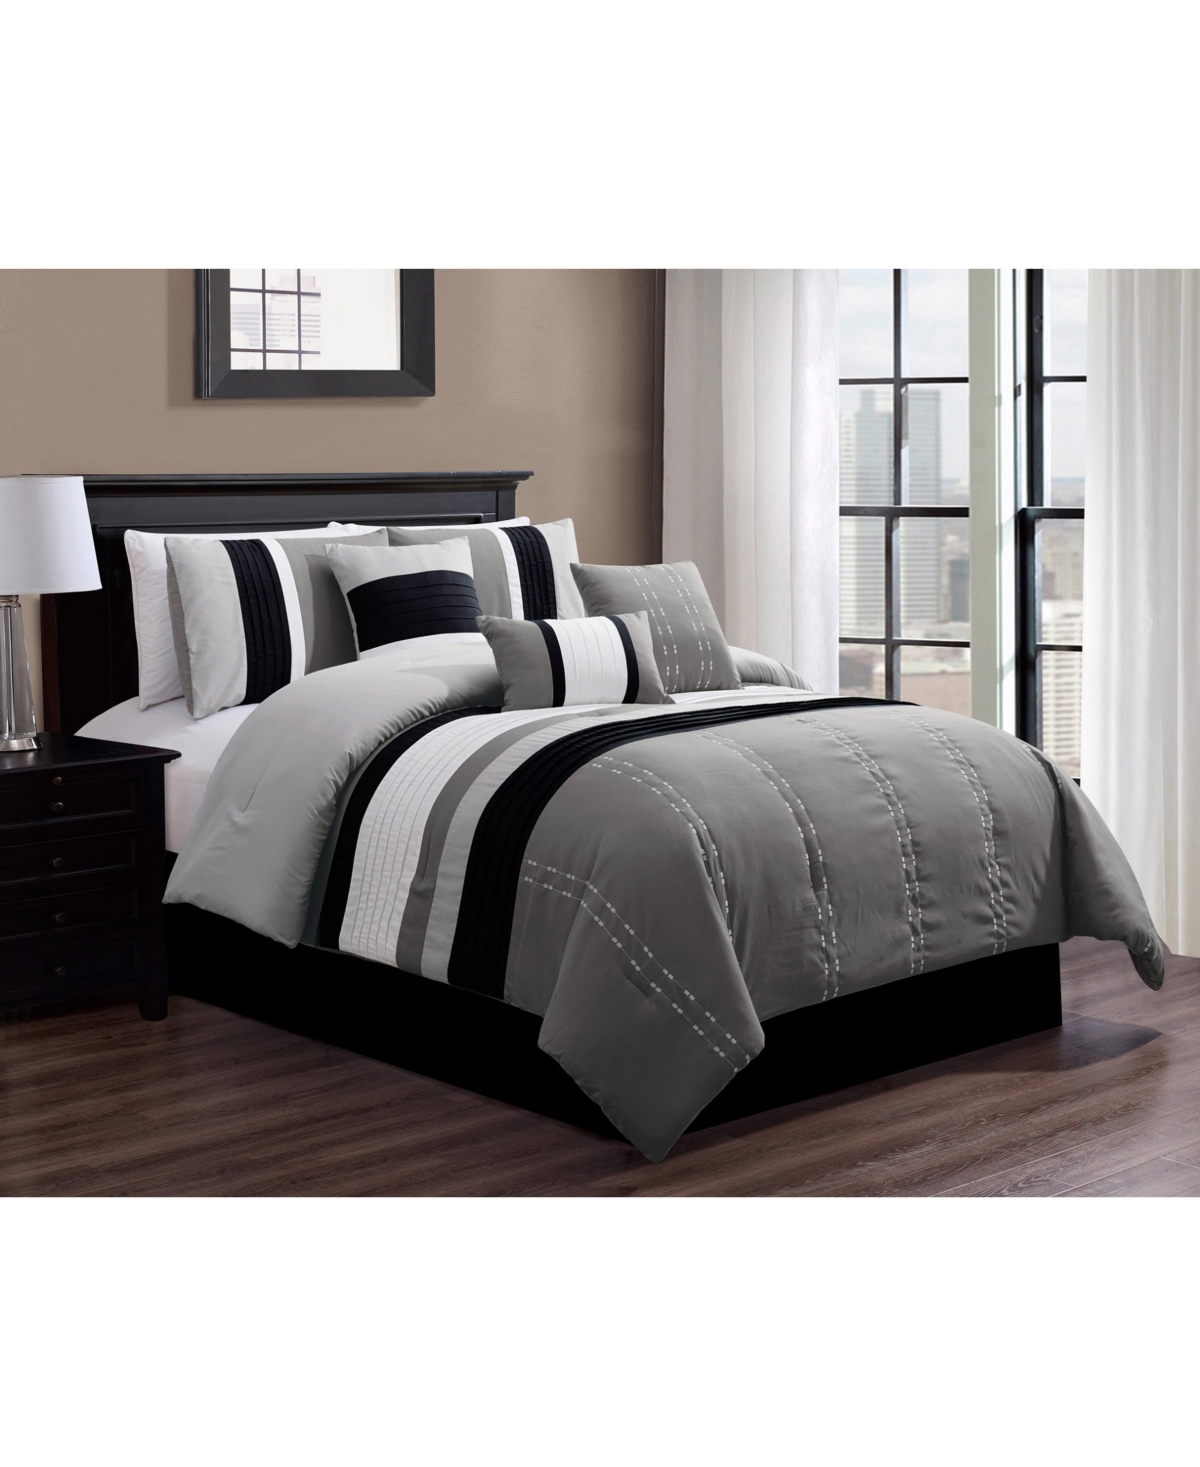 Luxlen Kastner 7 Piece Comforter Set, Cal King Bedding In Black